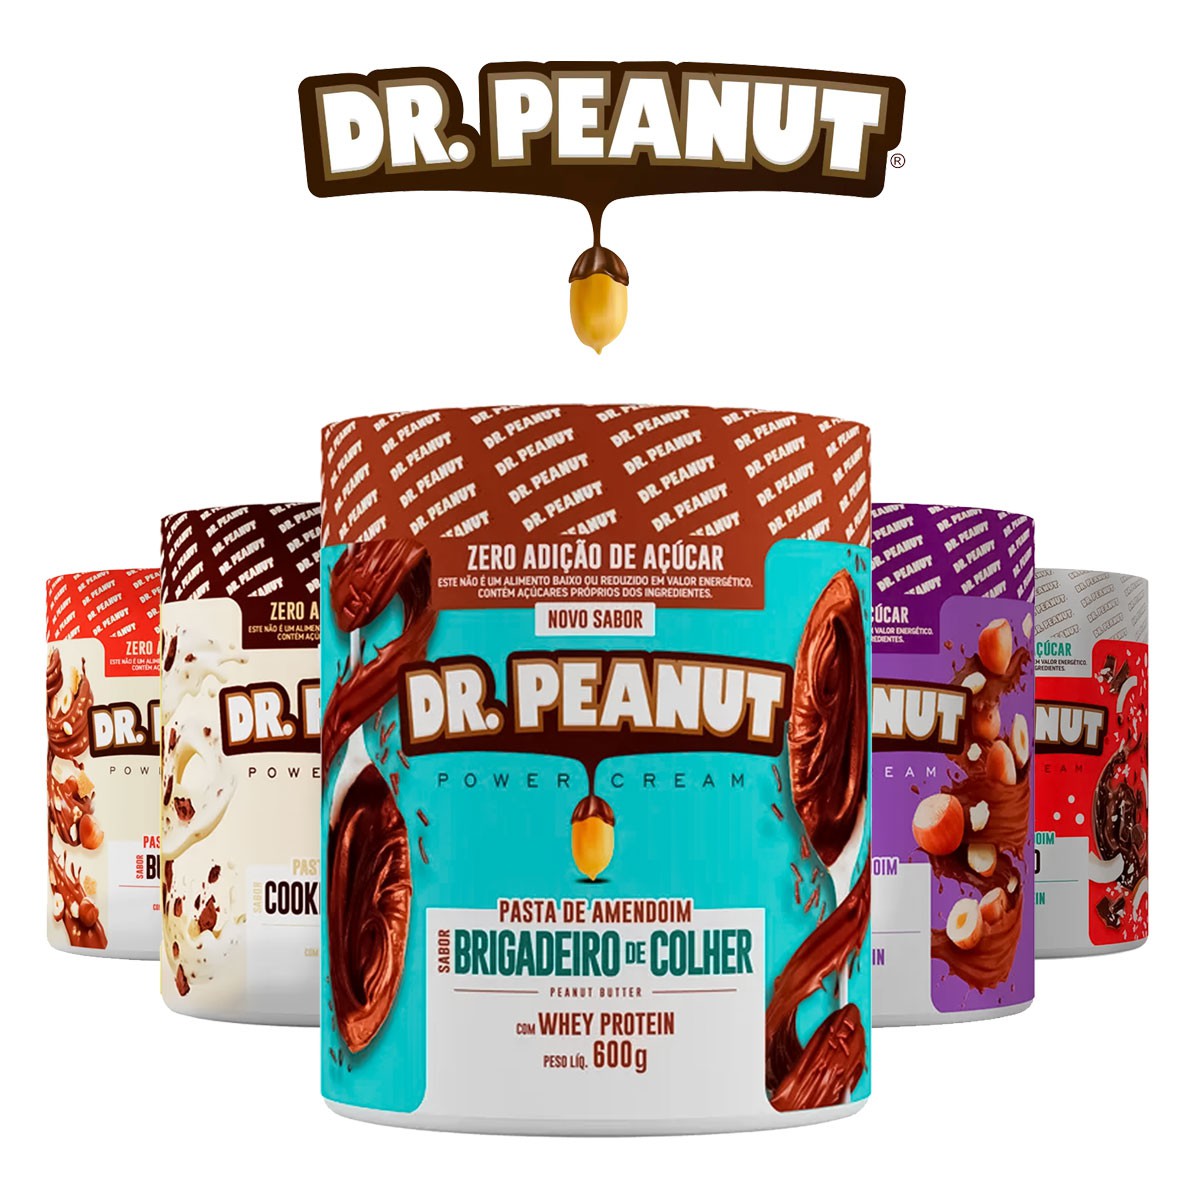 Dr. Peanut no LinkedIn: #drpeanut #drpeanutpower #pastadedamendoim #podpah  #mitico #igao #parceria…